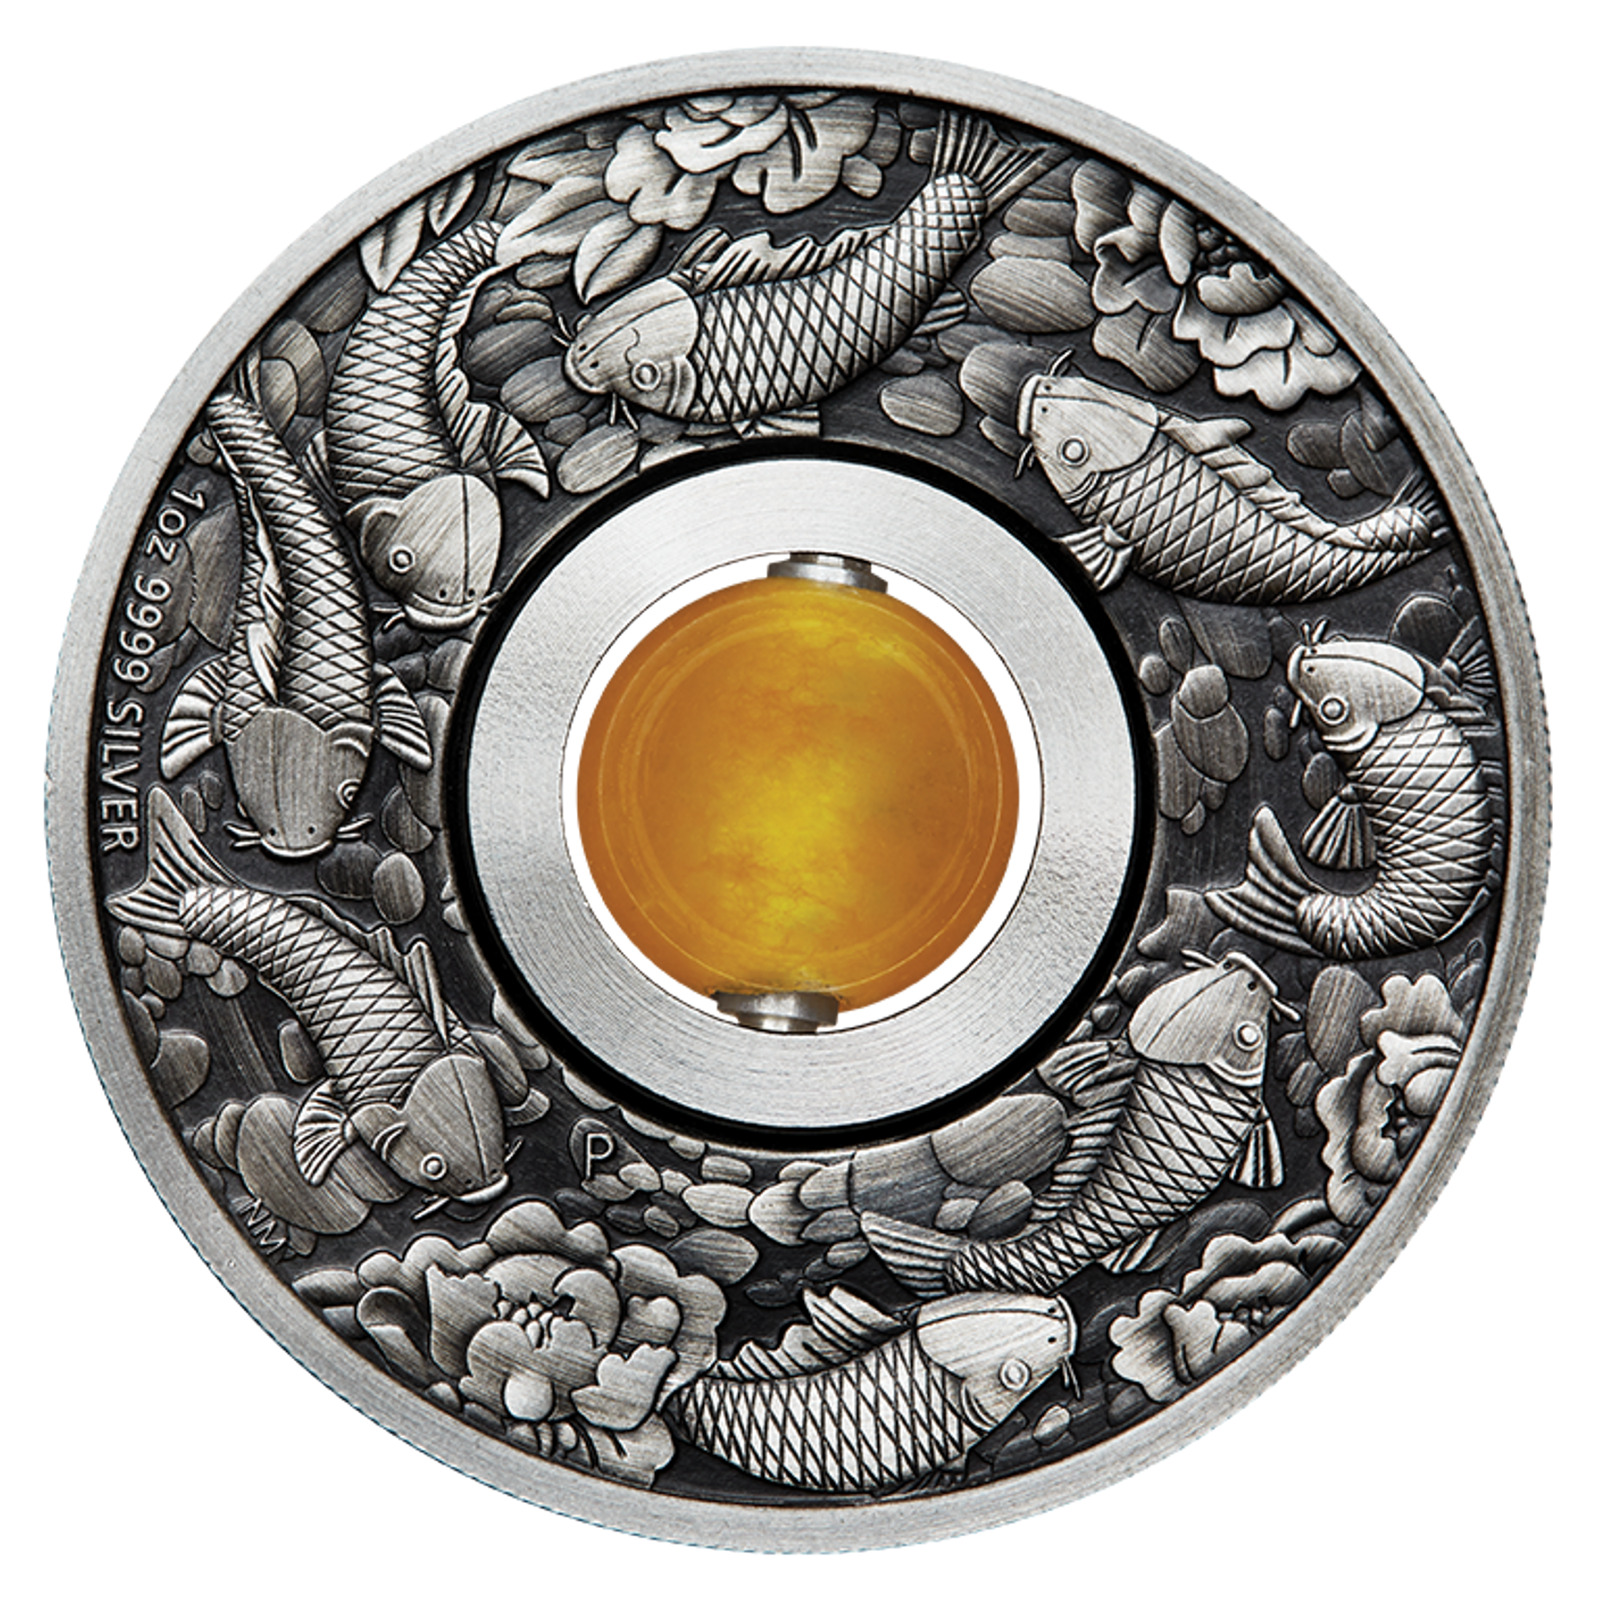 2018 Good Luck - Rotating Topaz Charm 1oz Silver Antiqued Coin - Koi Fish